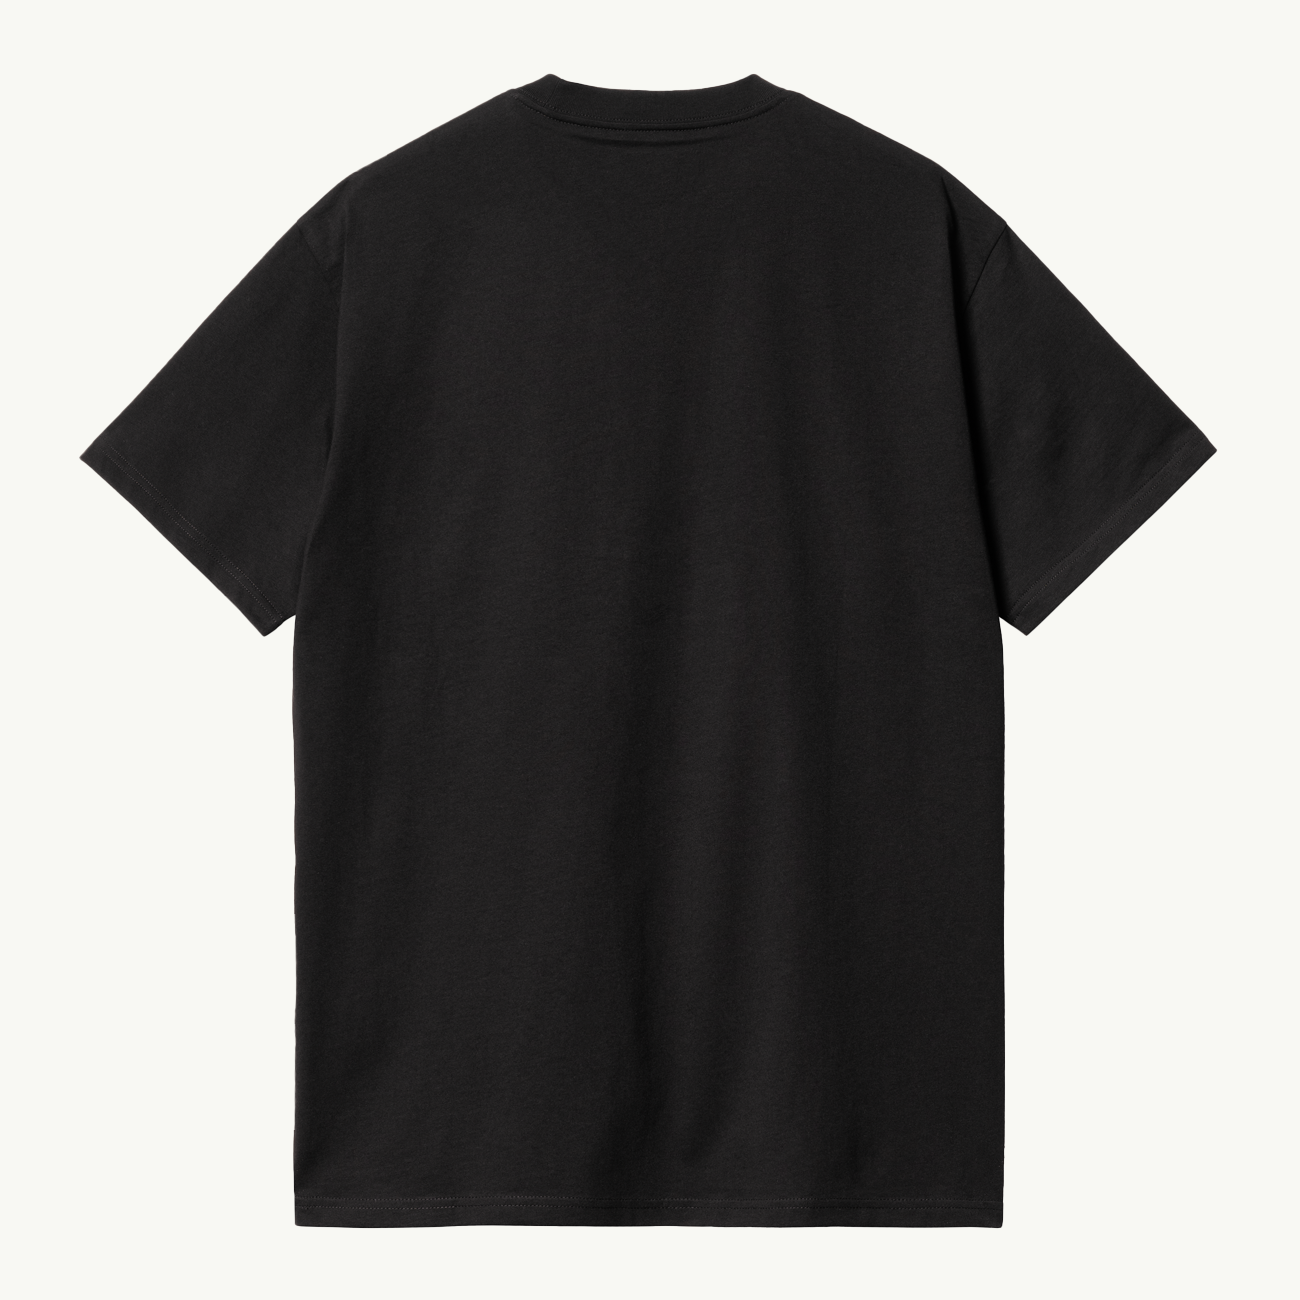 SS Stone Cold T-Shirt - Black